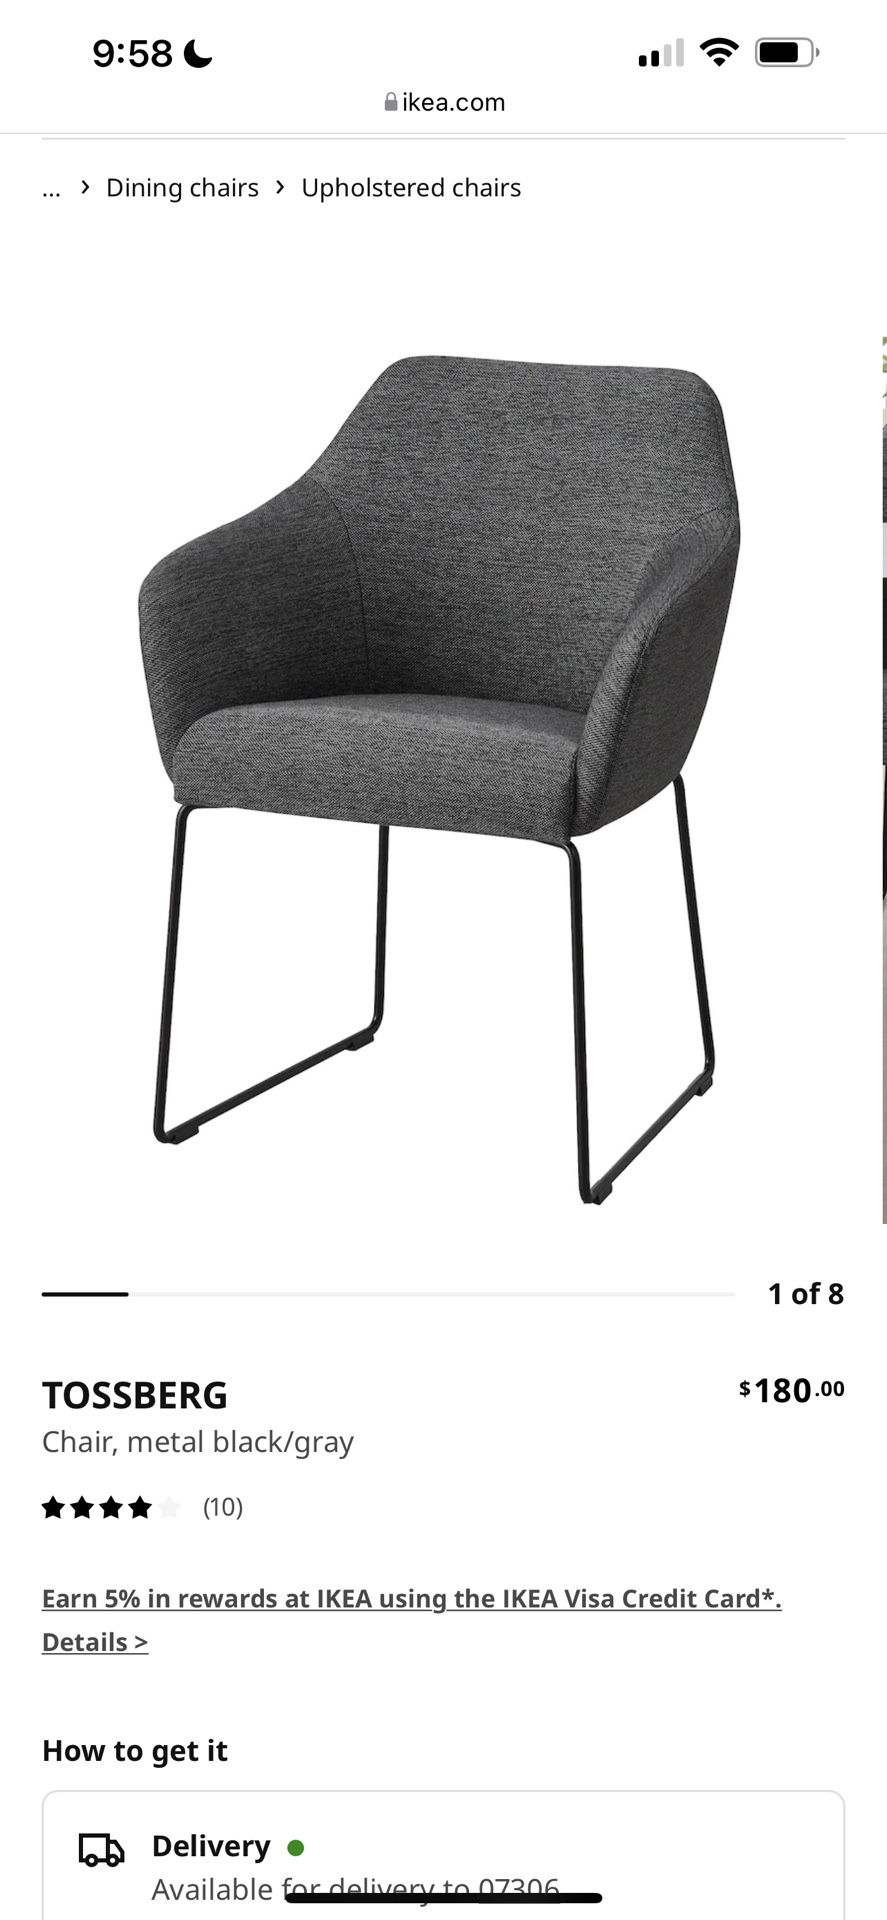 TOSSBERG Chair, metal black/gray